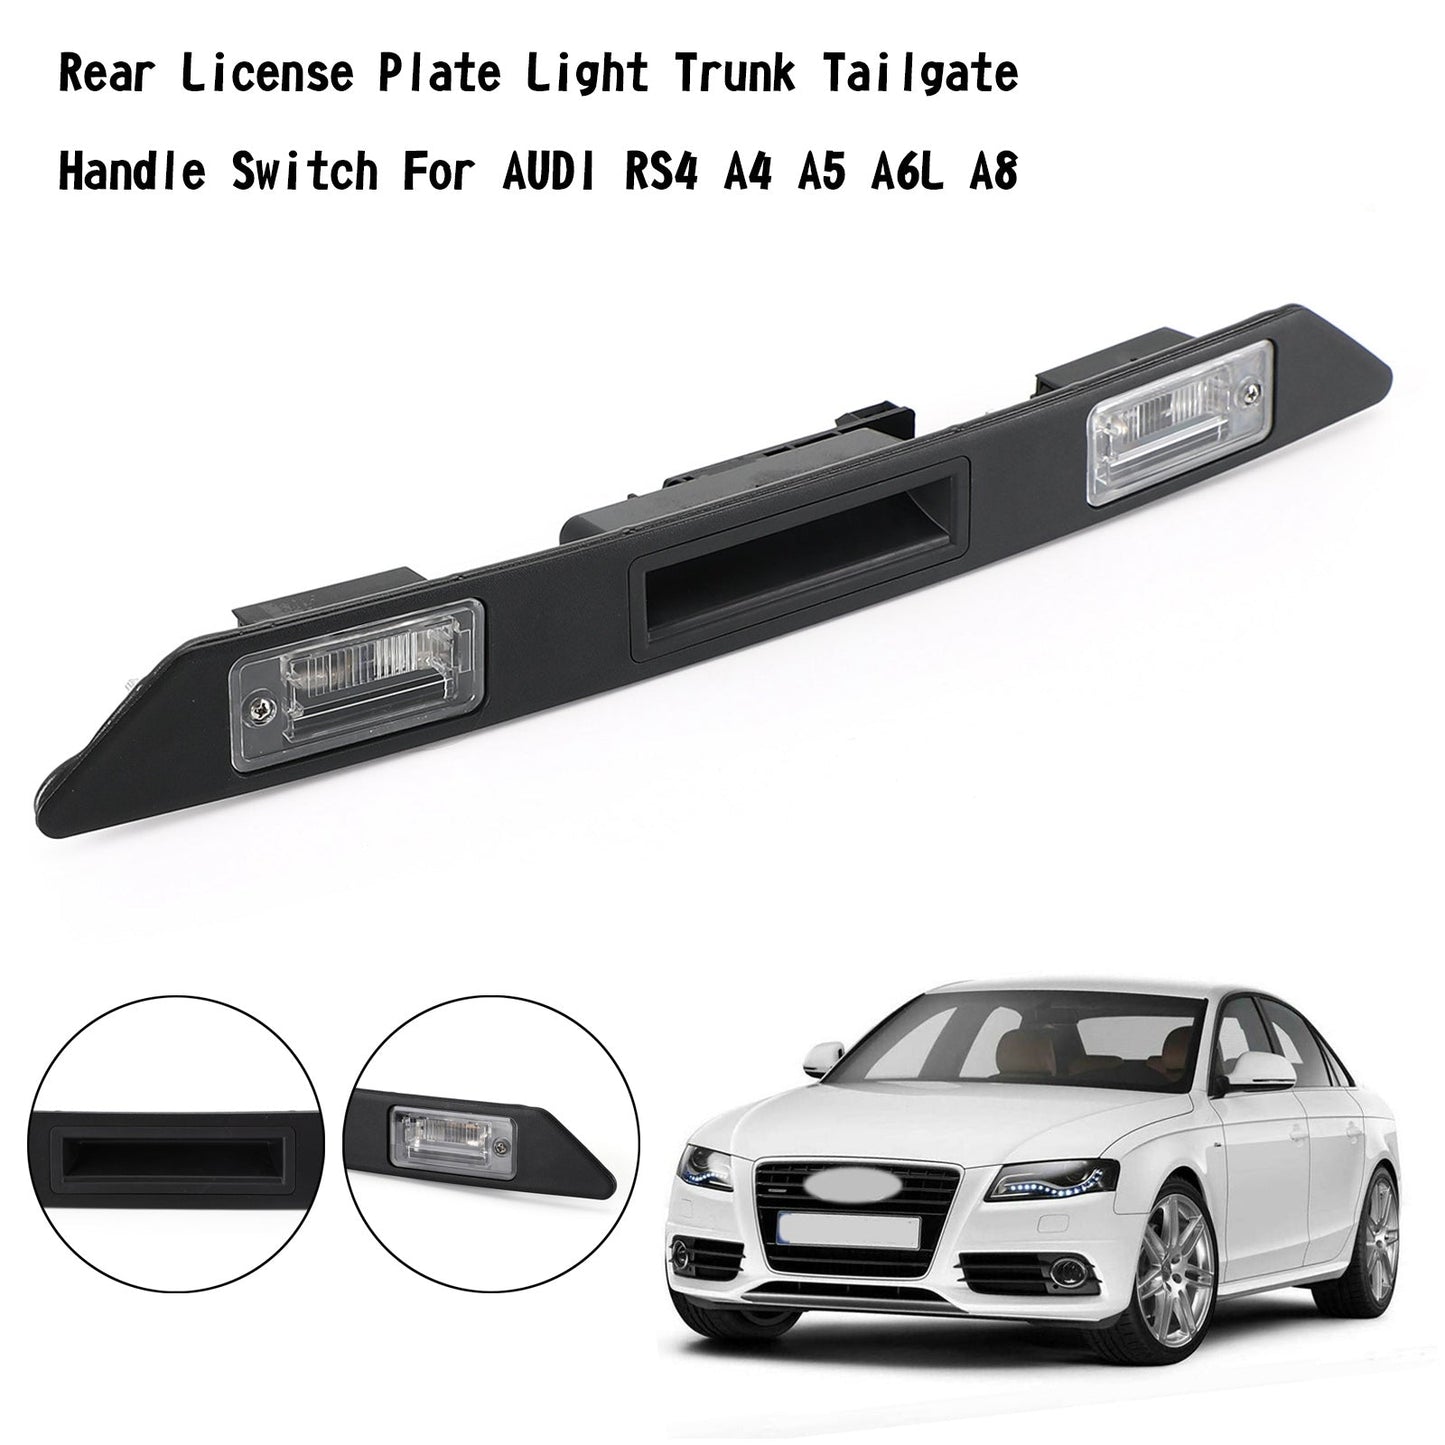 2007-2015 Audi Q7 Models Rear License Plate Light Trunk Tailgate Handle Switch 8P48275743FZ